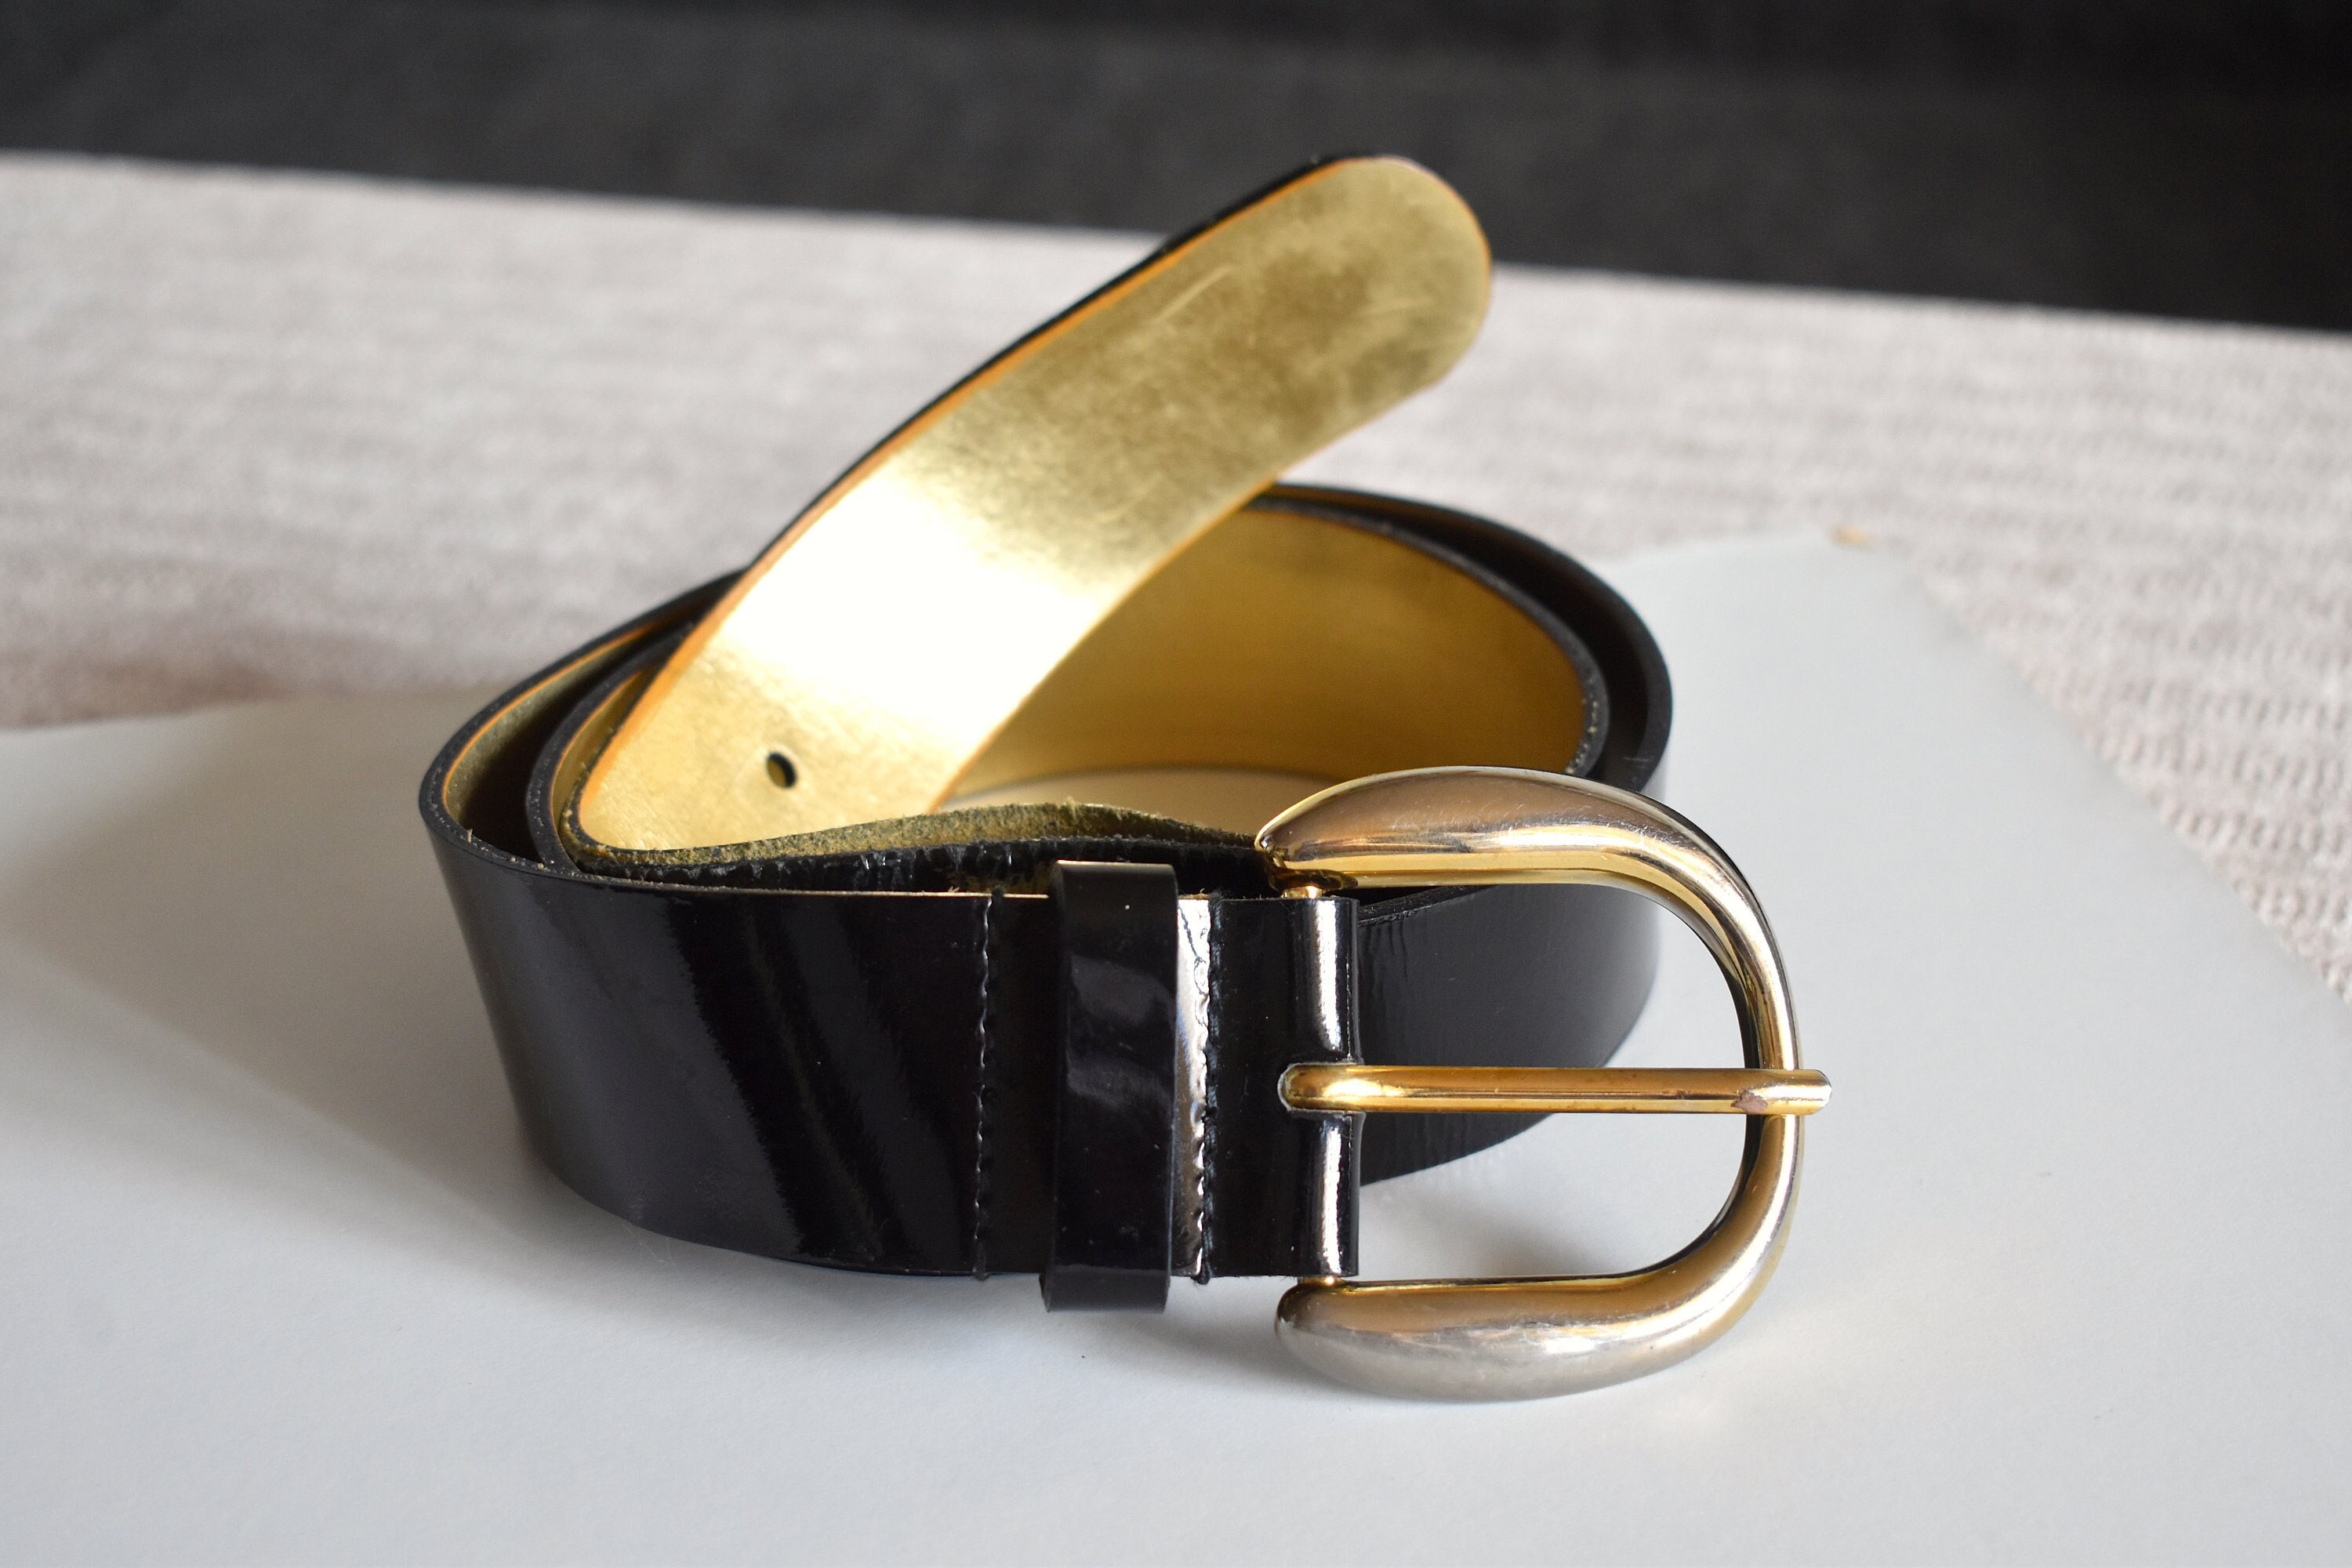 Valentino Rockstud Accents Leather Belt 3XL